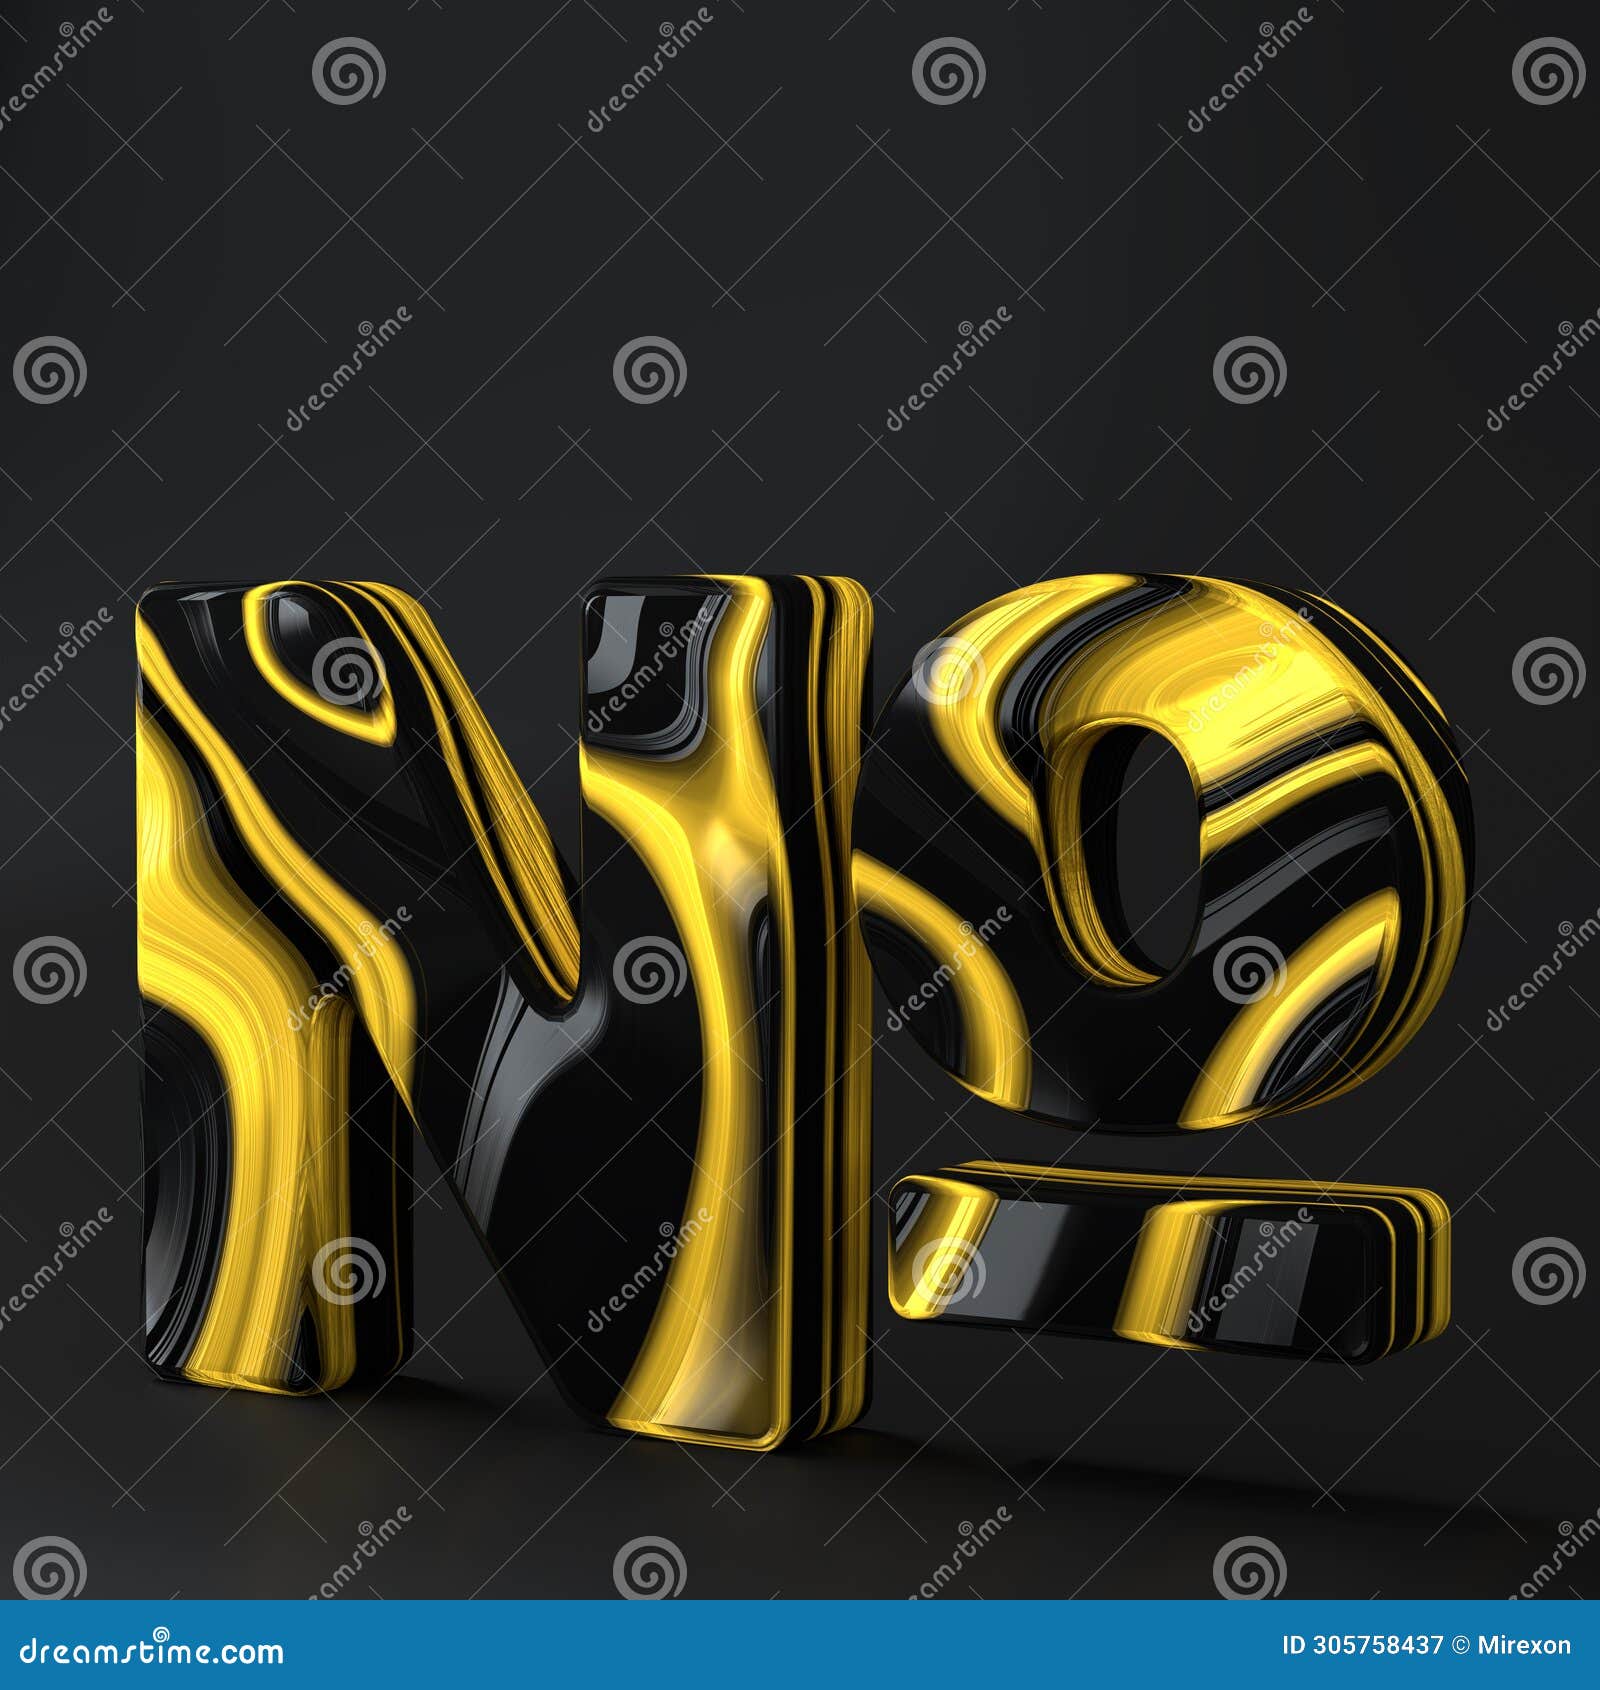 luxury style golden numero sign icon. graphic , ui ux , presentation or background